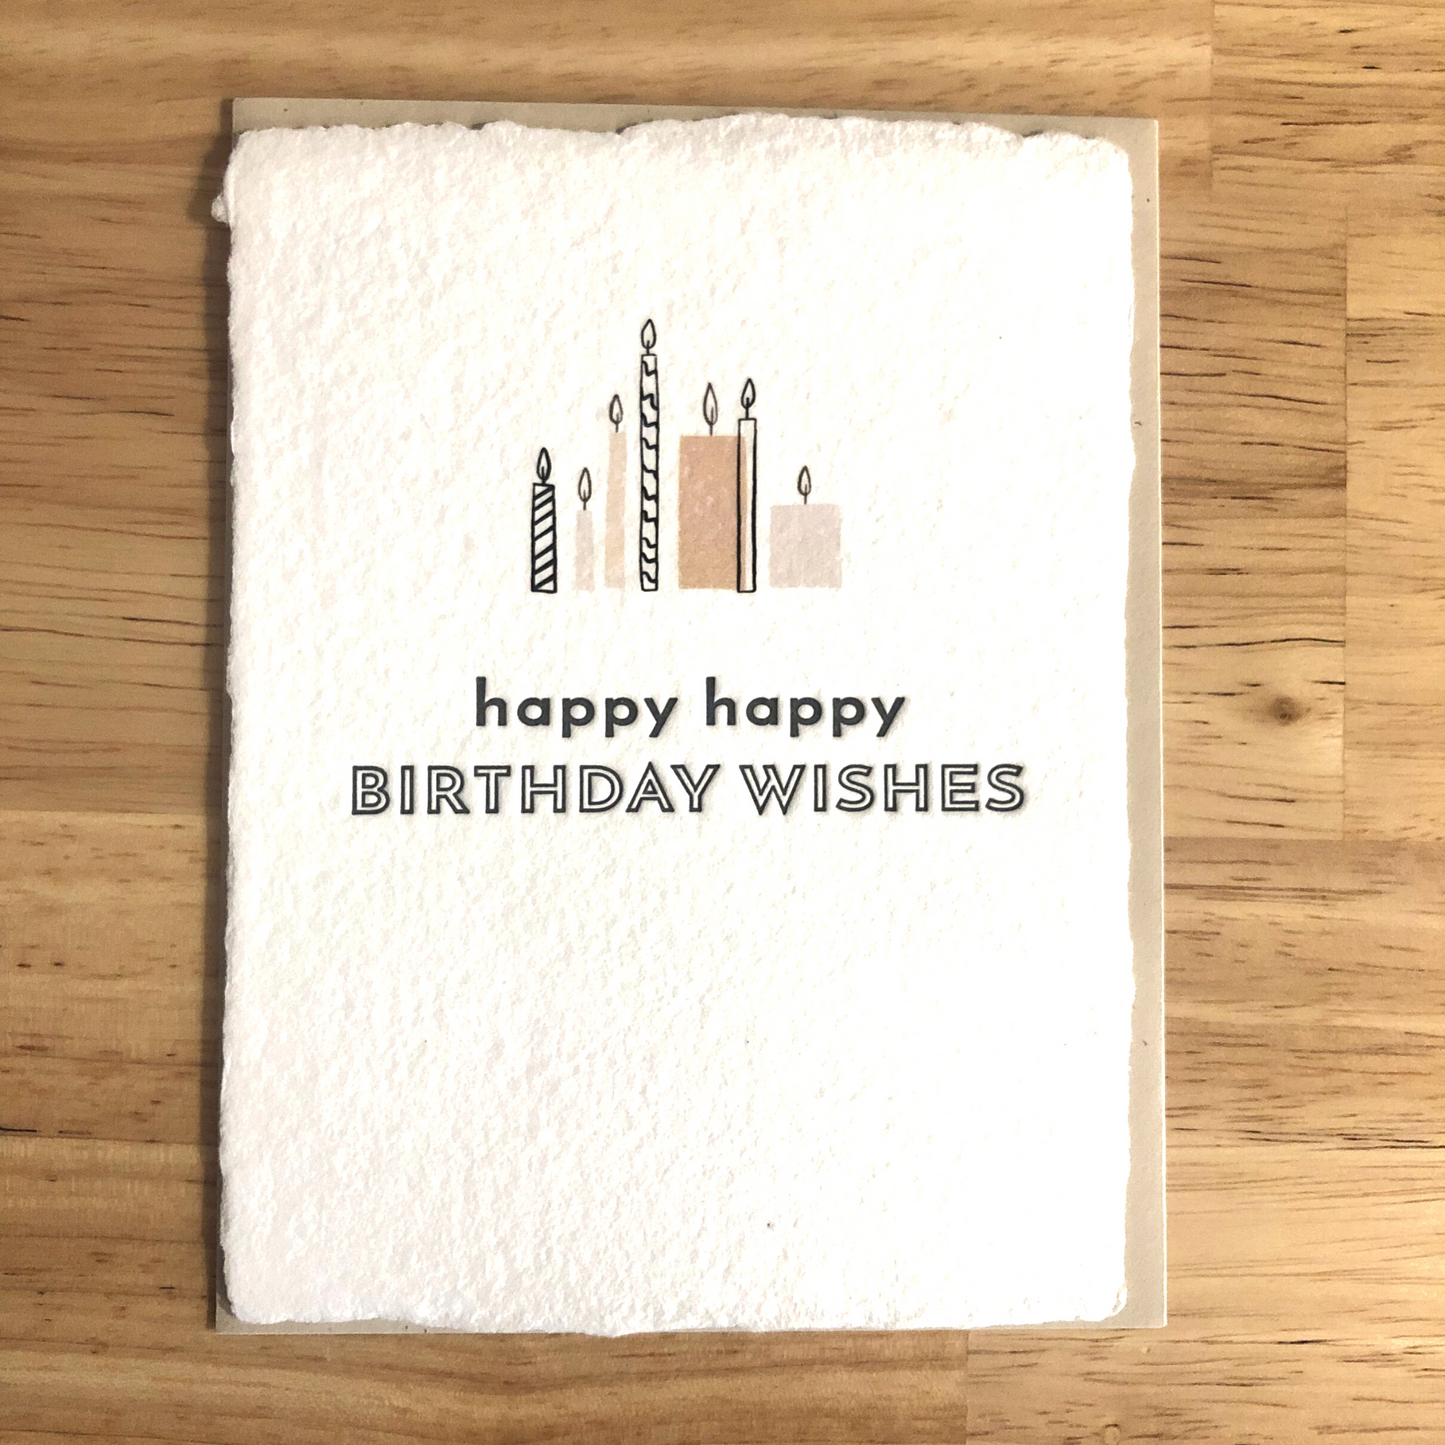 Handmade Birthday Card- "Happy Happy Birthday Wishes"